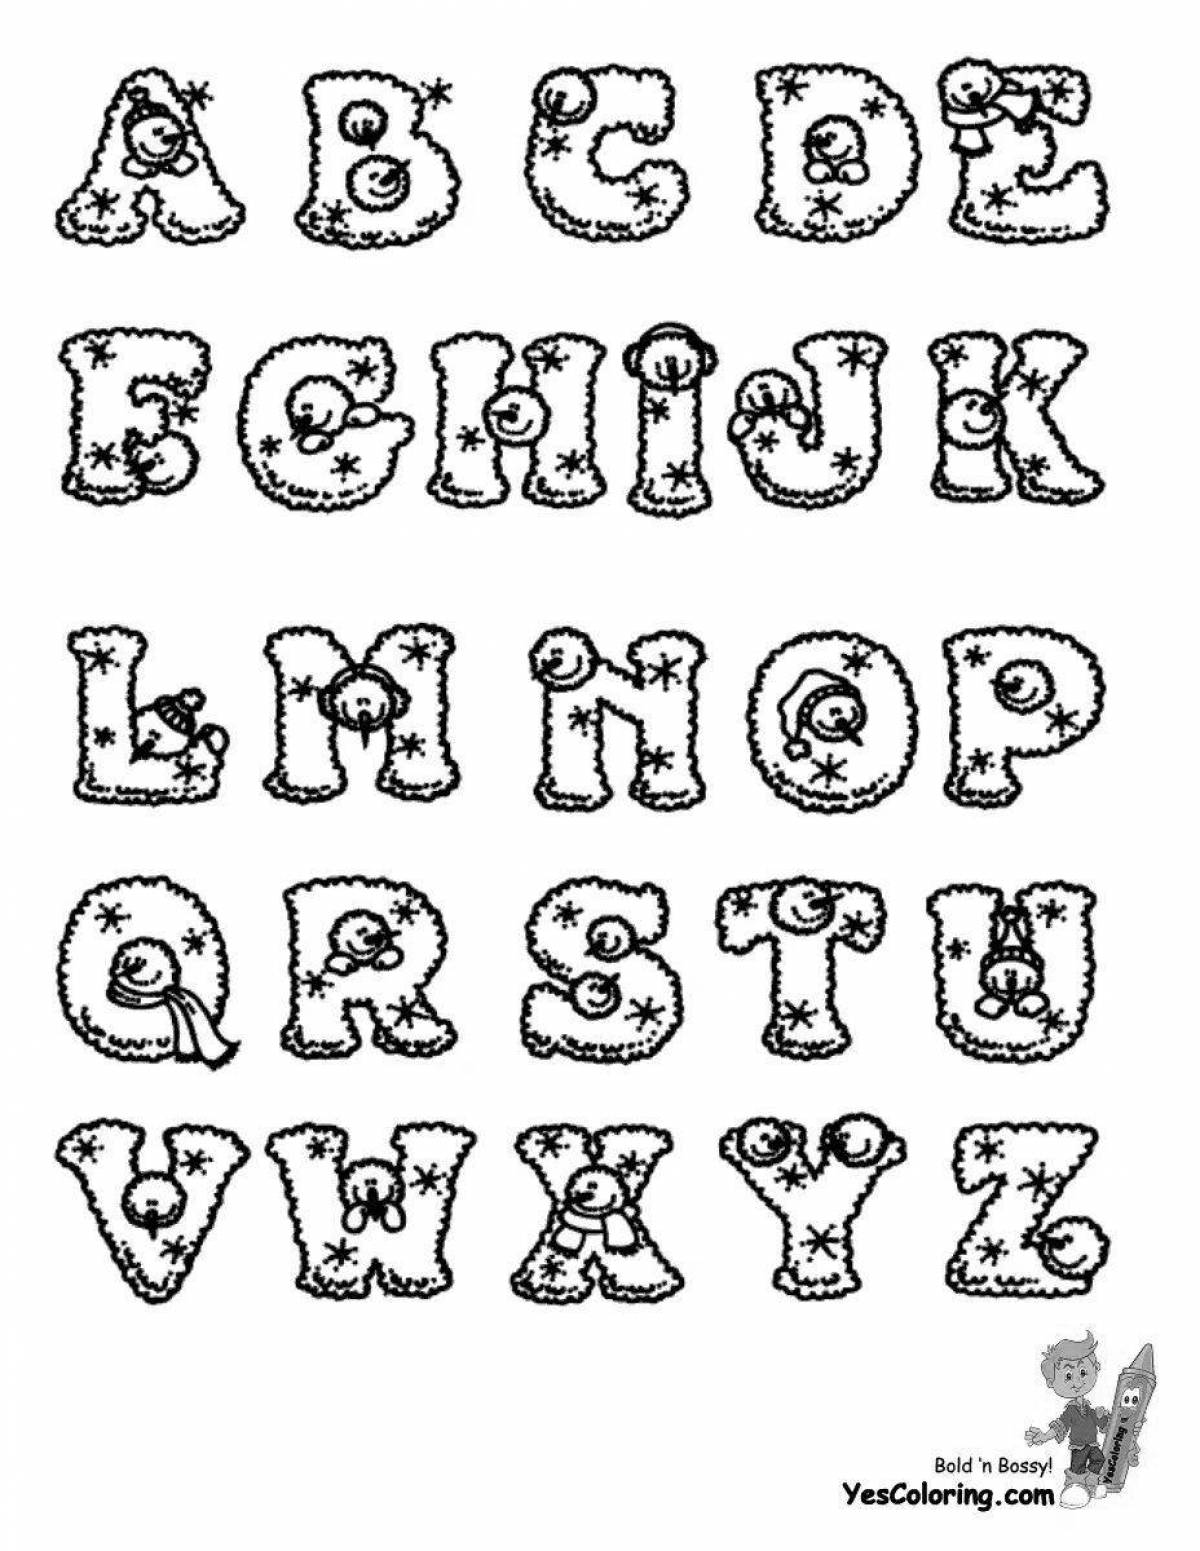 Bright alphabet with eyes